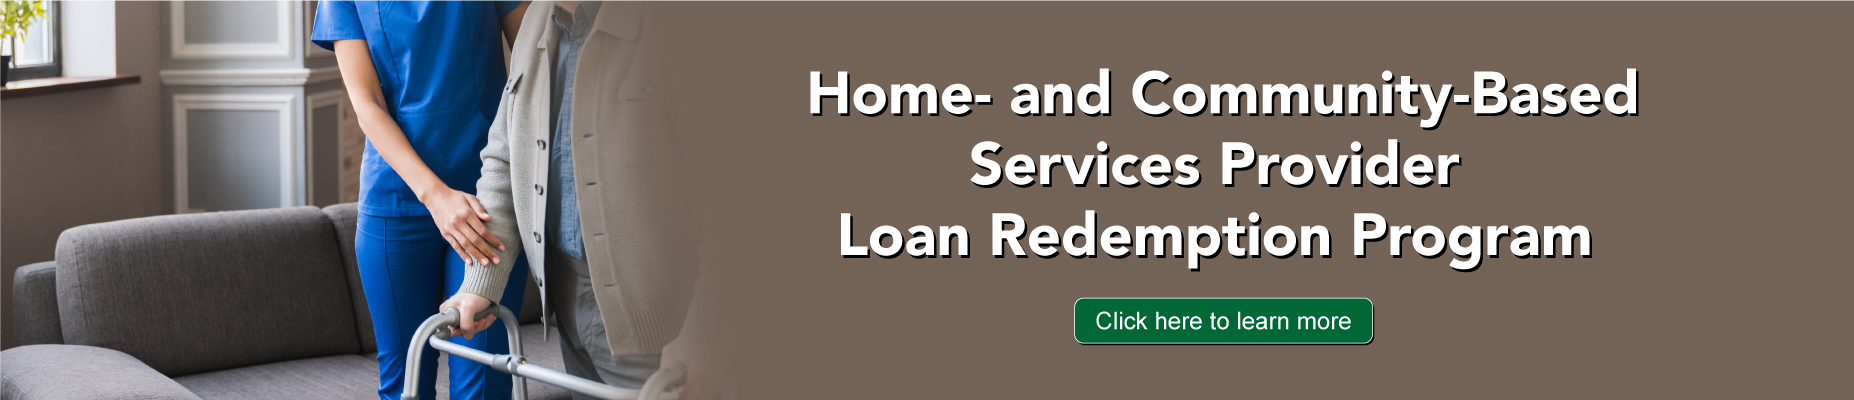 HCBSPLRP Loan Redemption Program